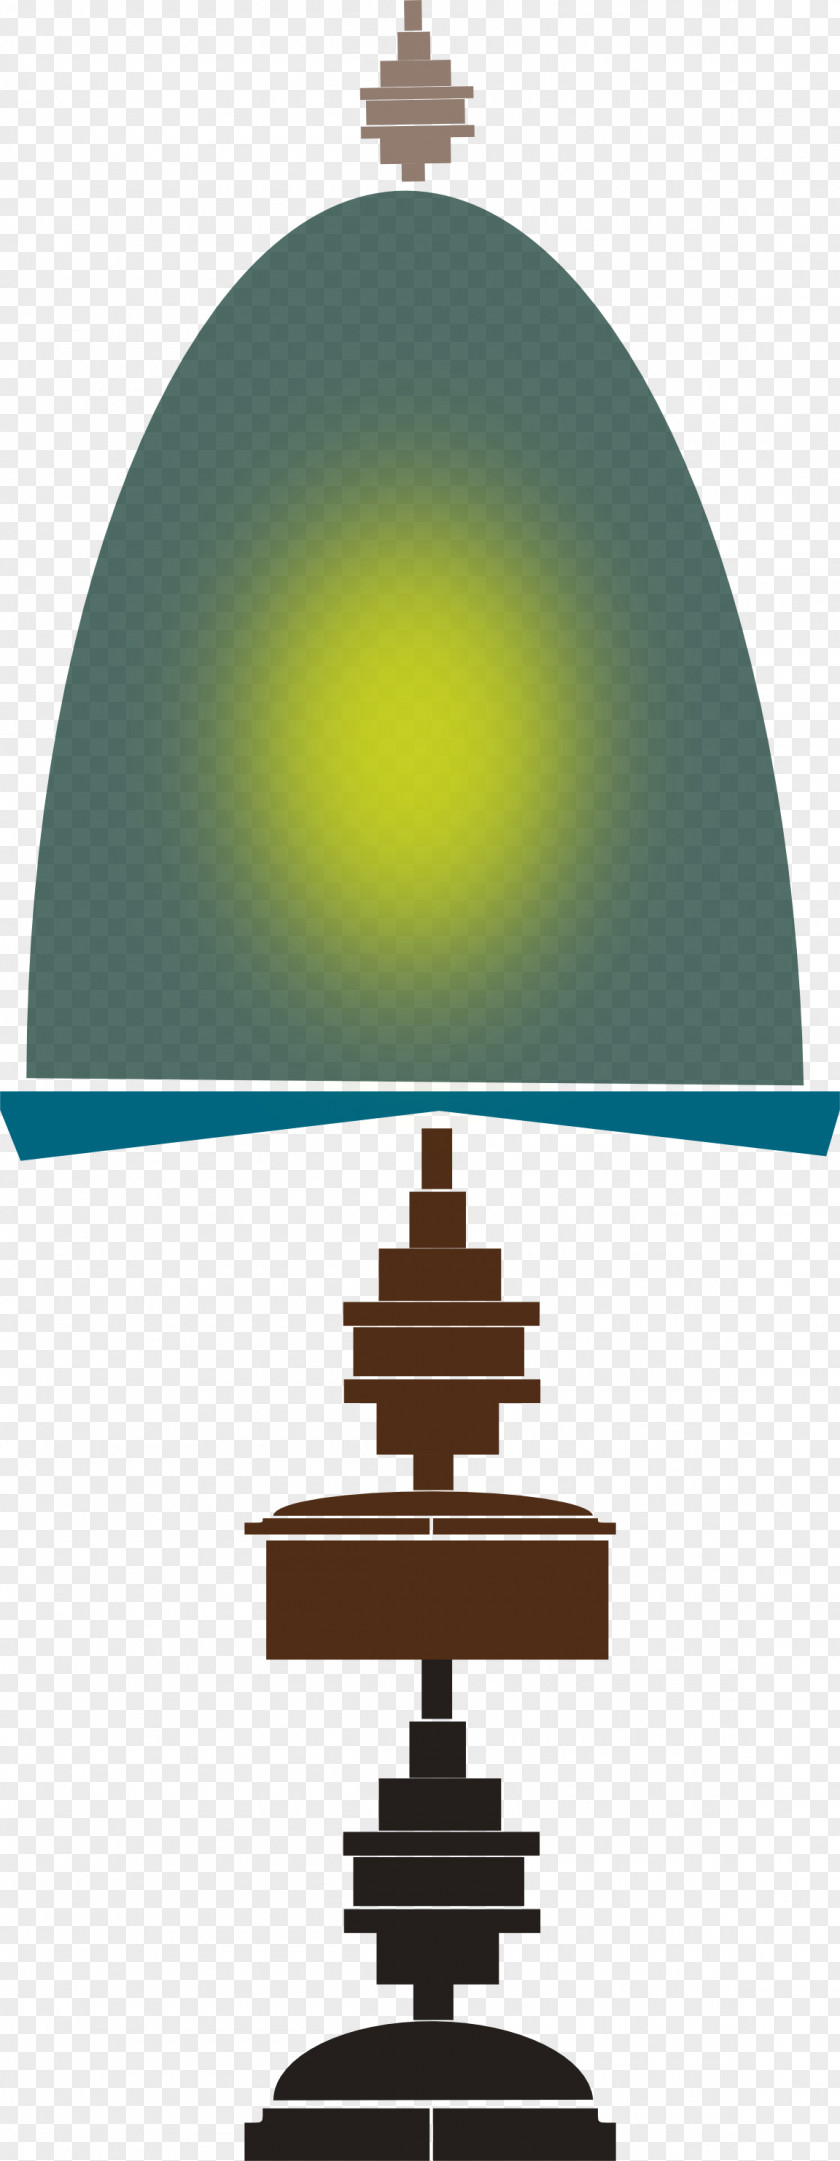 Lamp Incandescent Light Bulb Download Image PNG